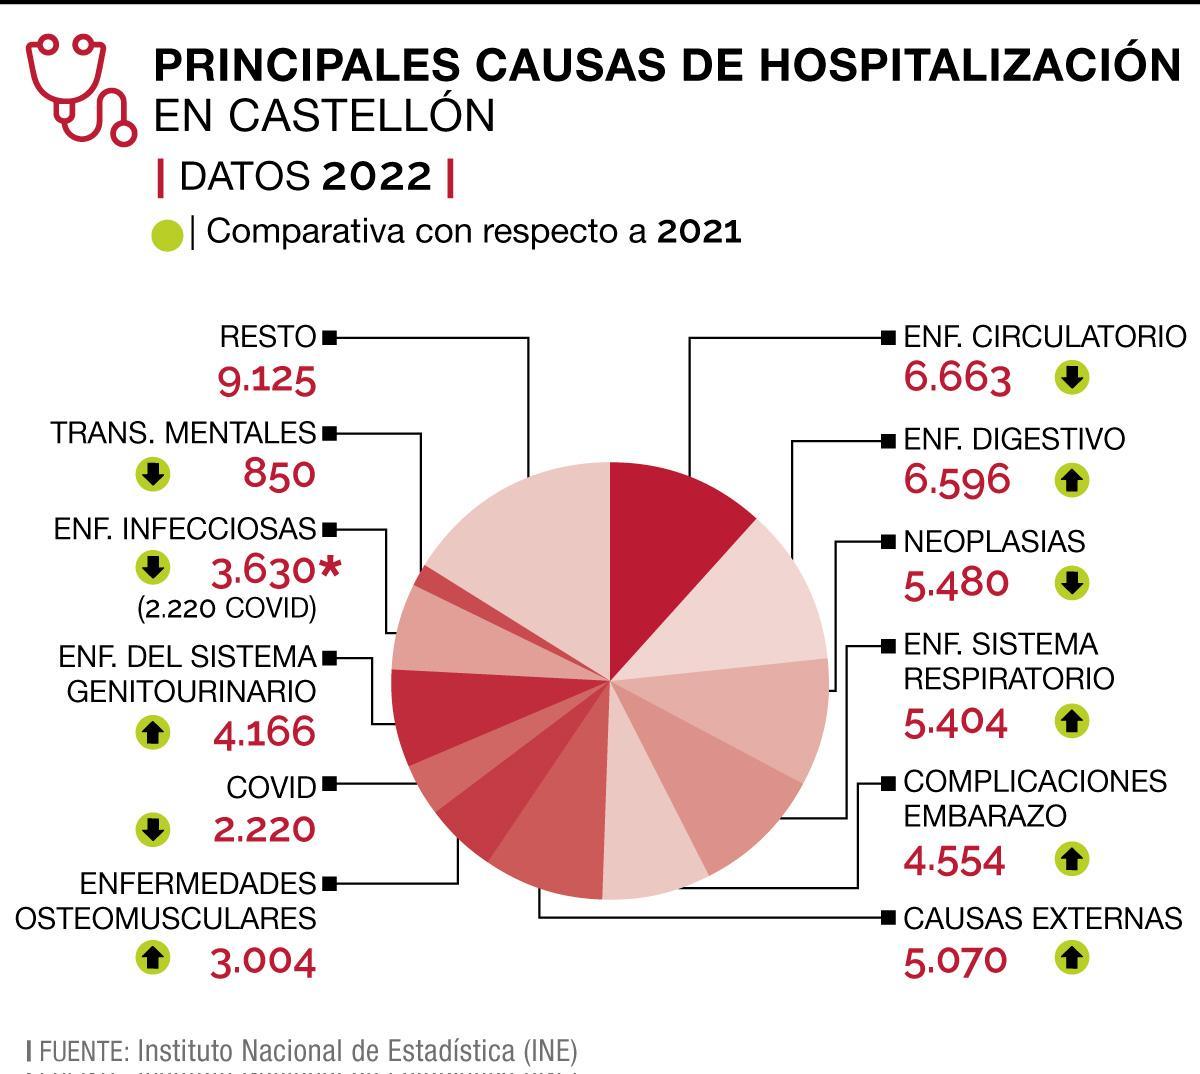 Principales causas de alta hospitalaria en Castellón